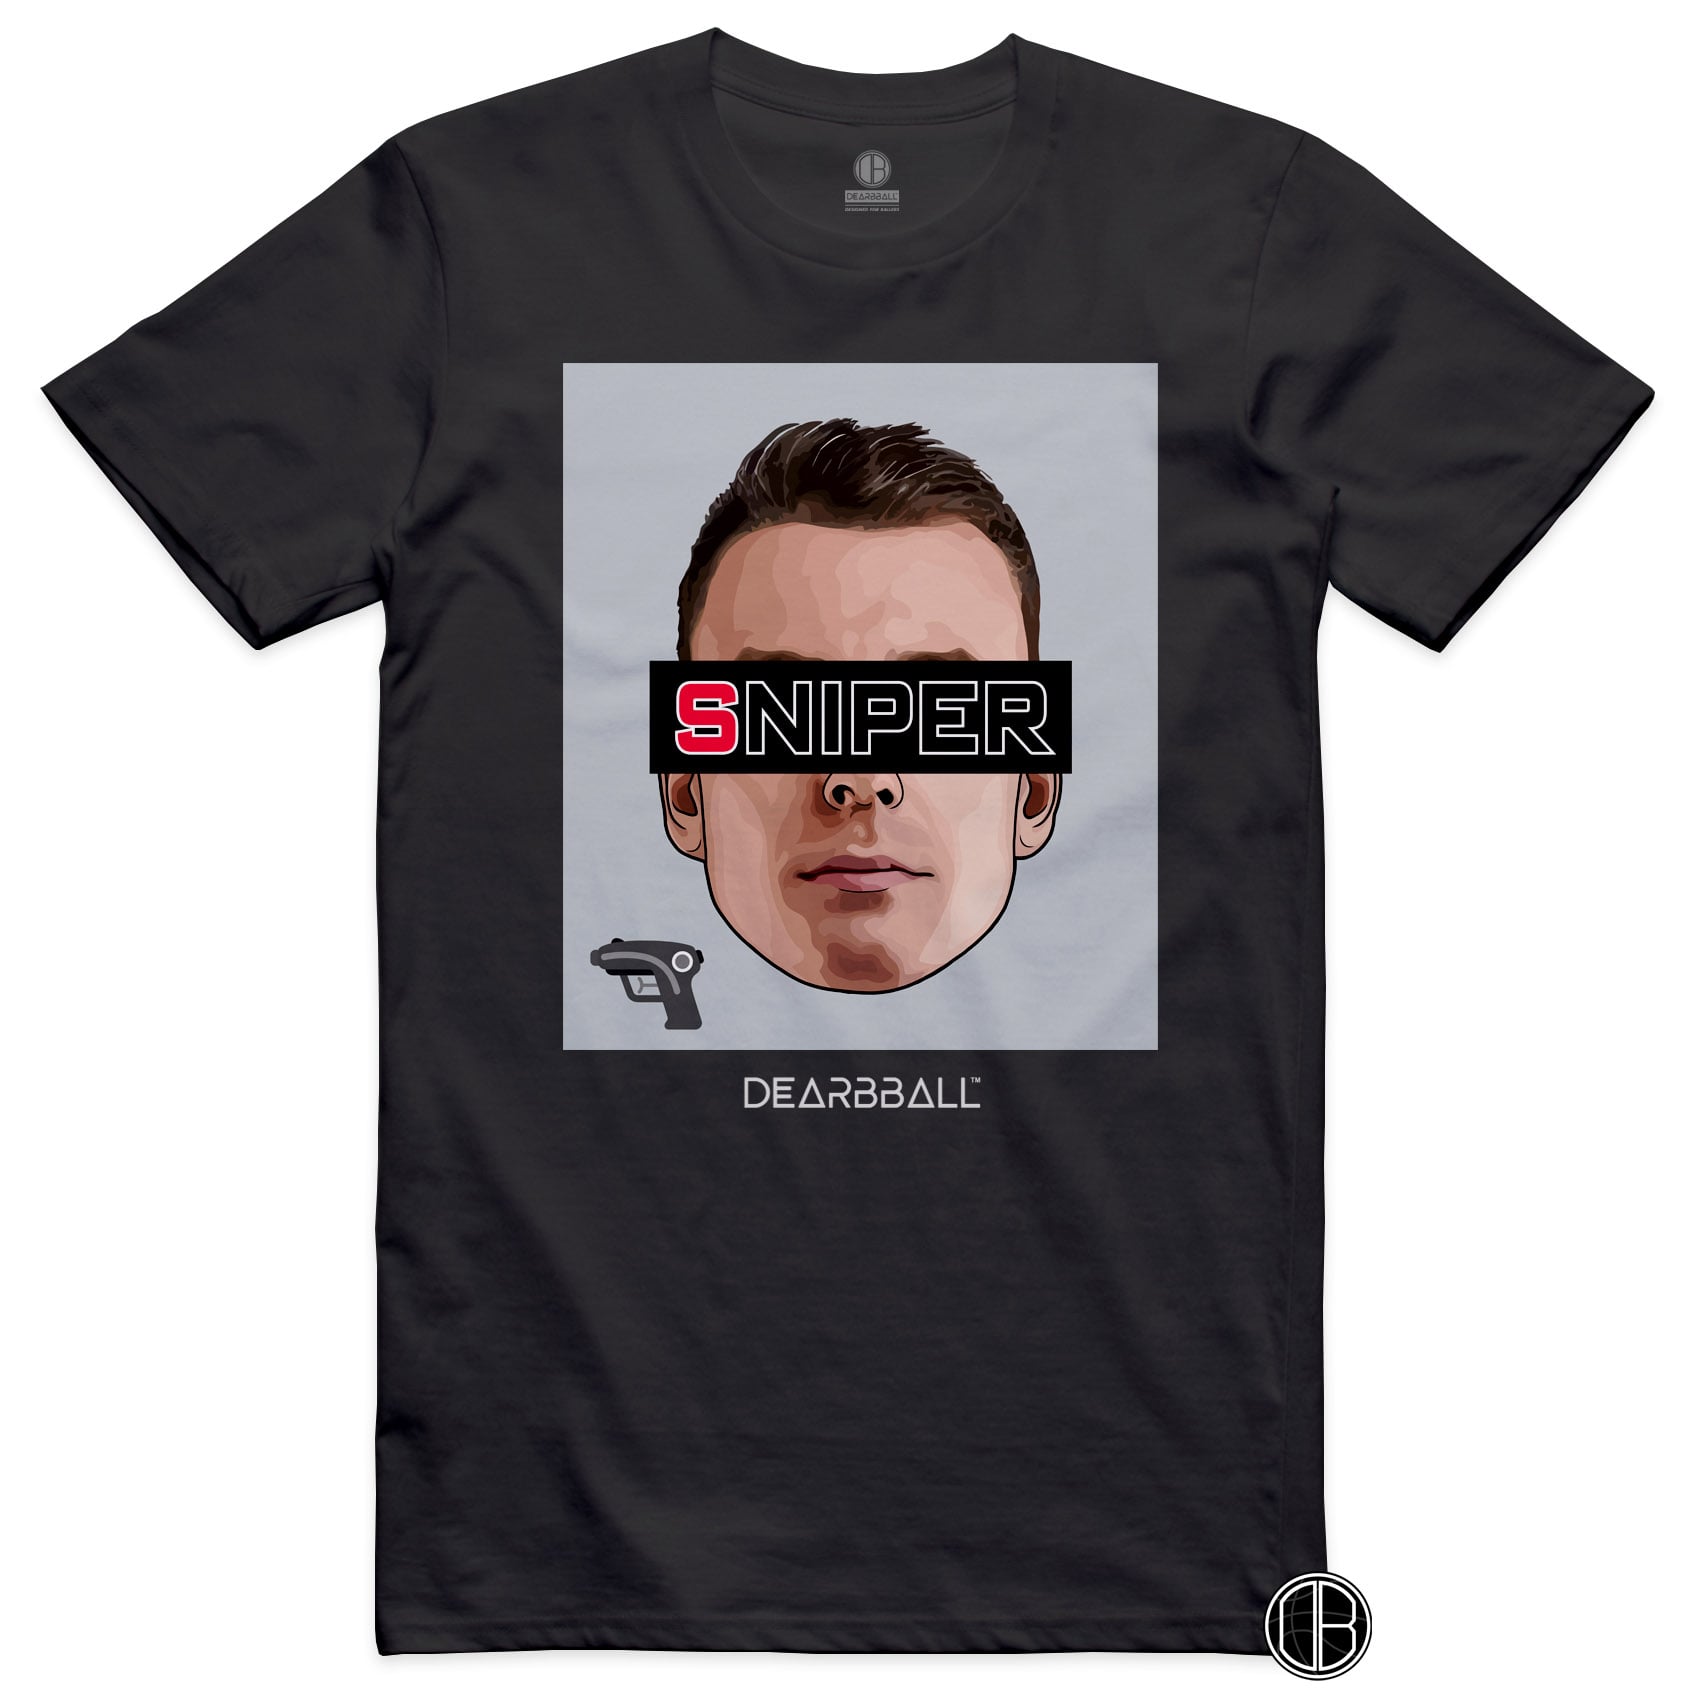 [ENFANT] DearBBall T-Shirt - SNIPER Black Edition